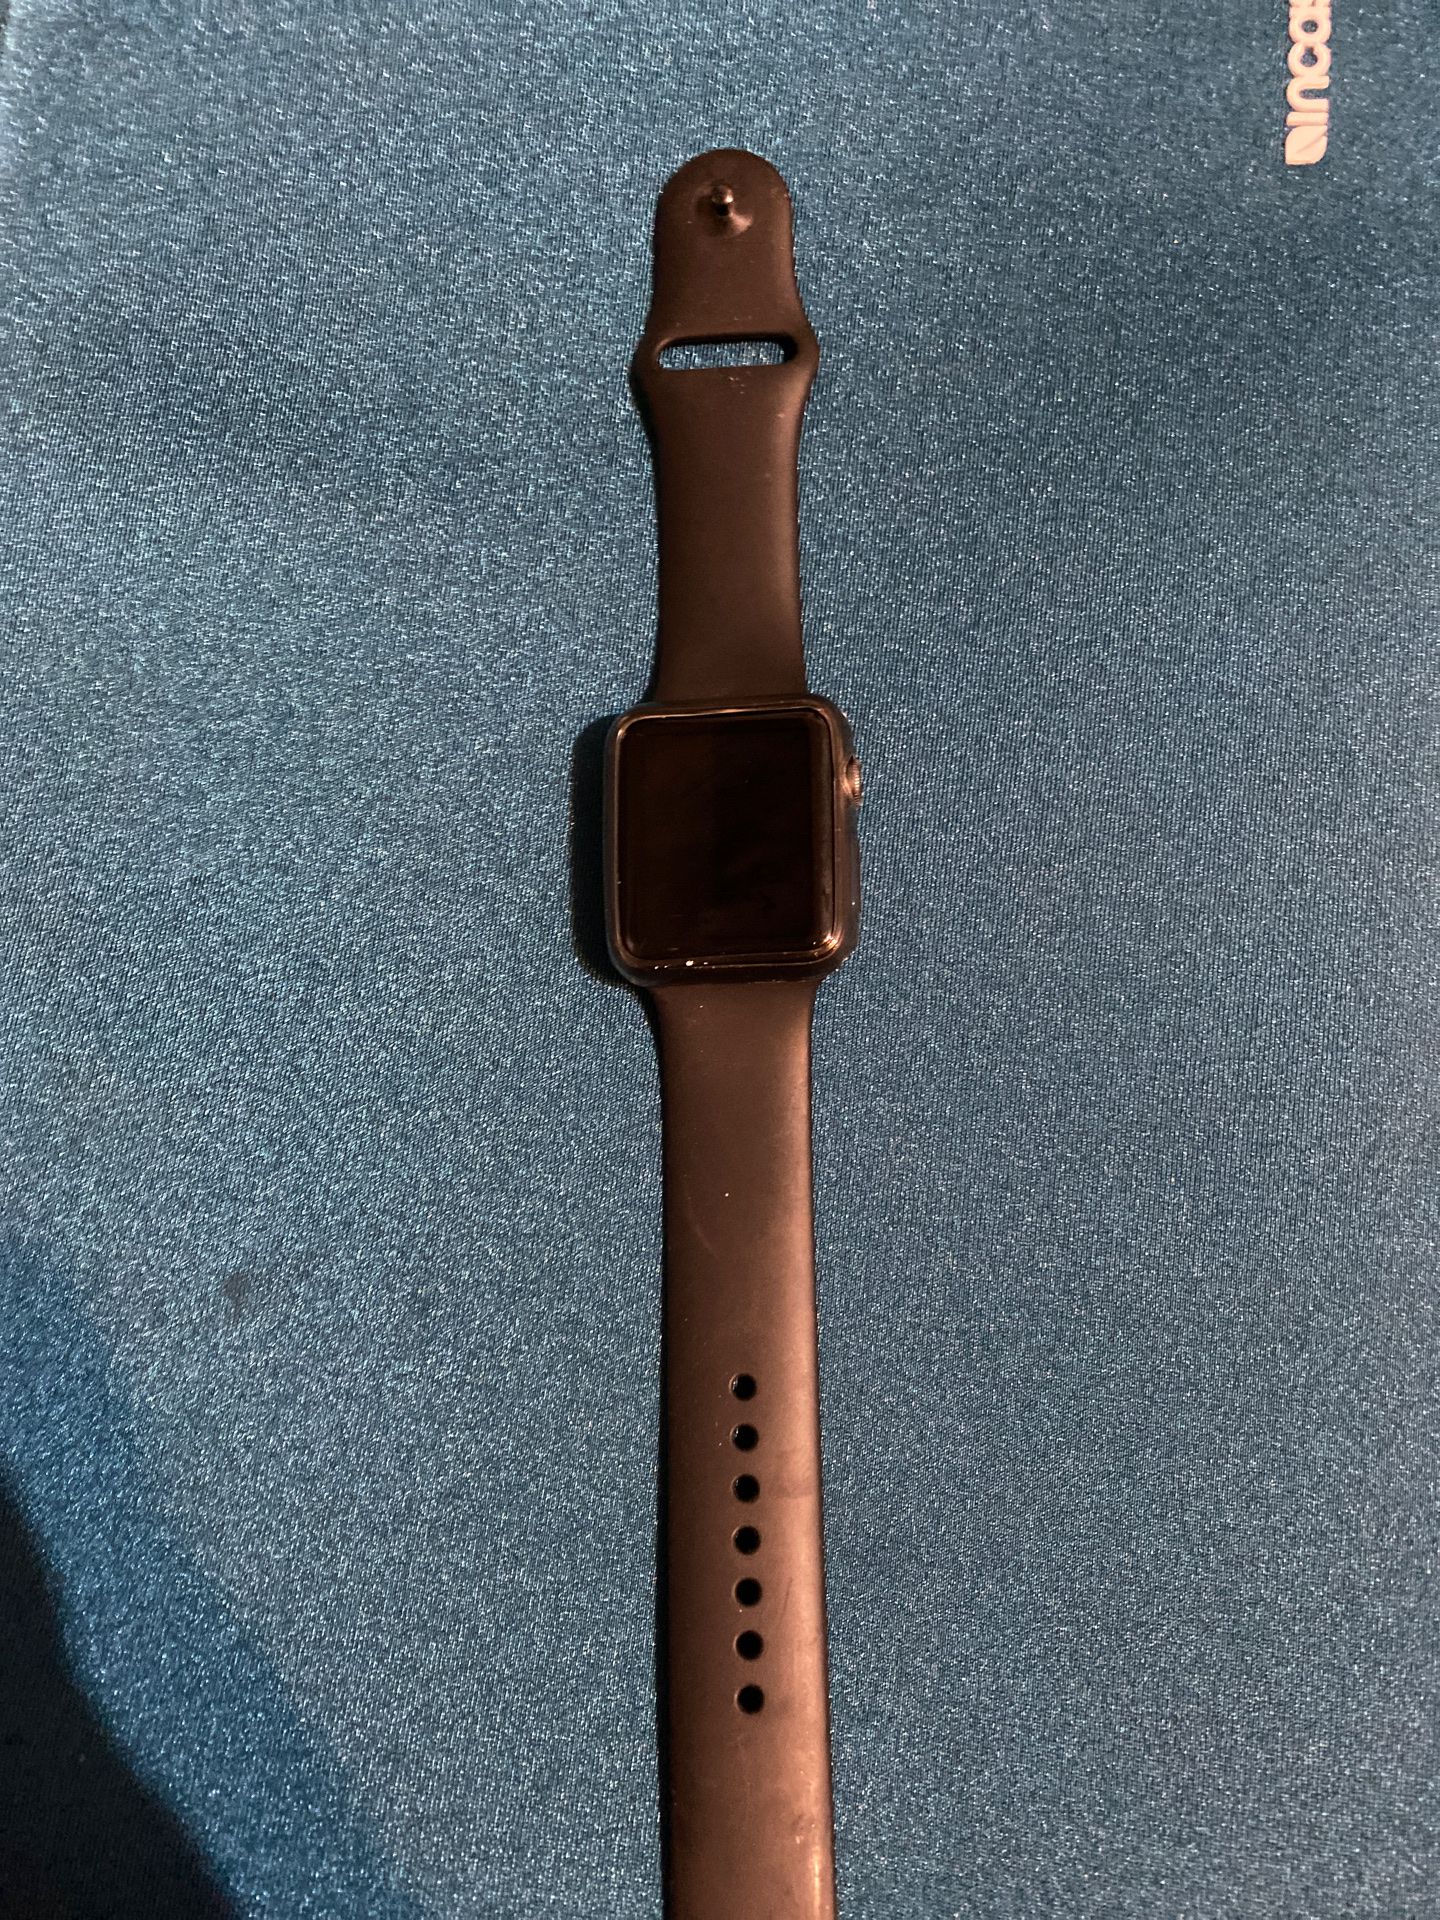 Apple Watch first gen